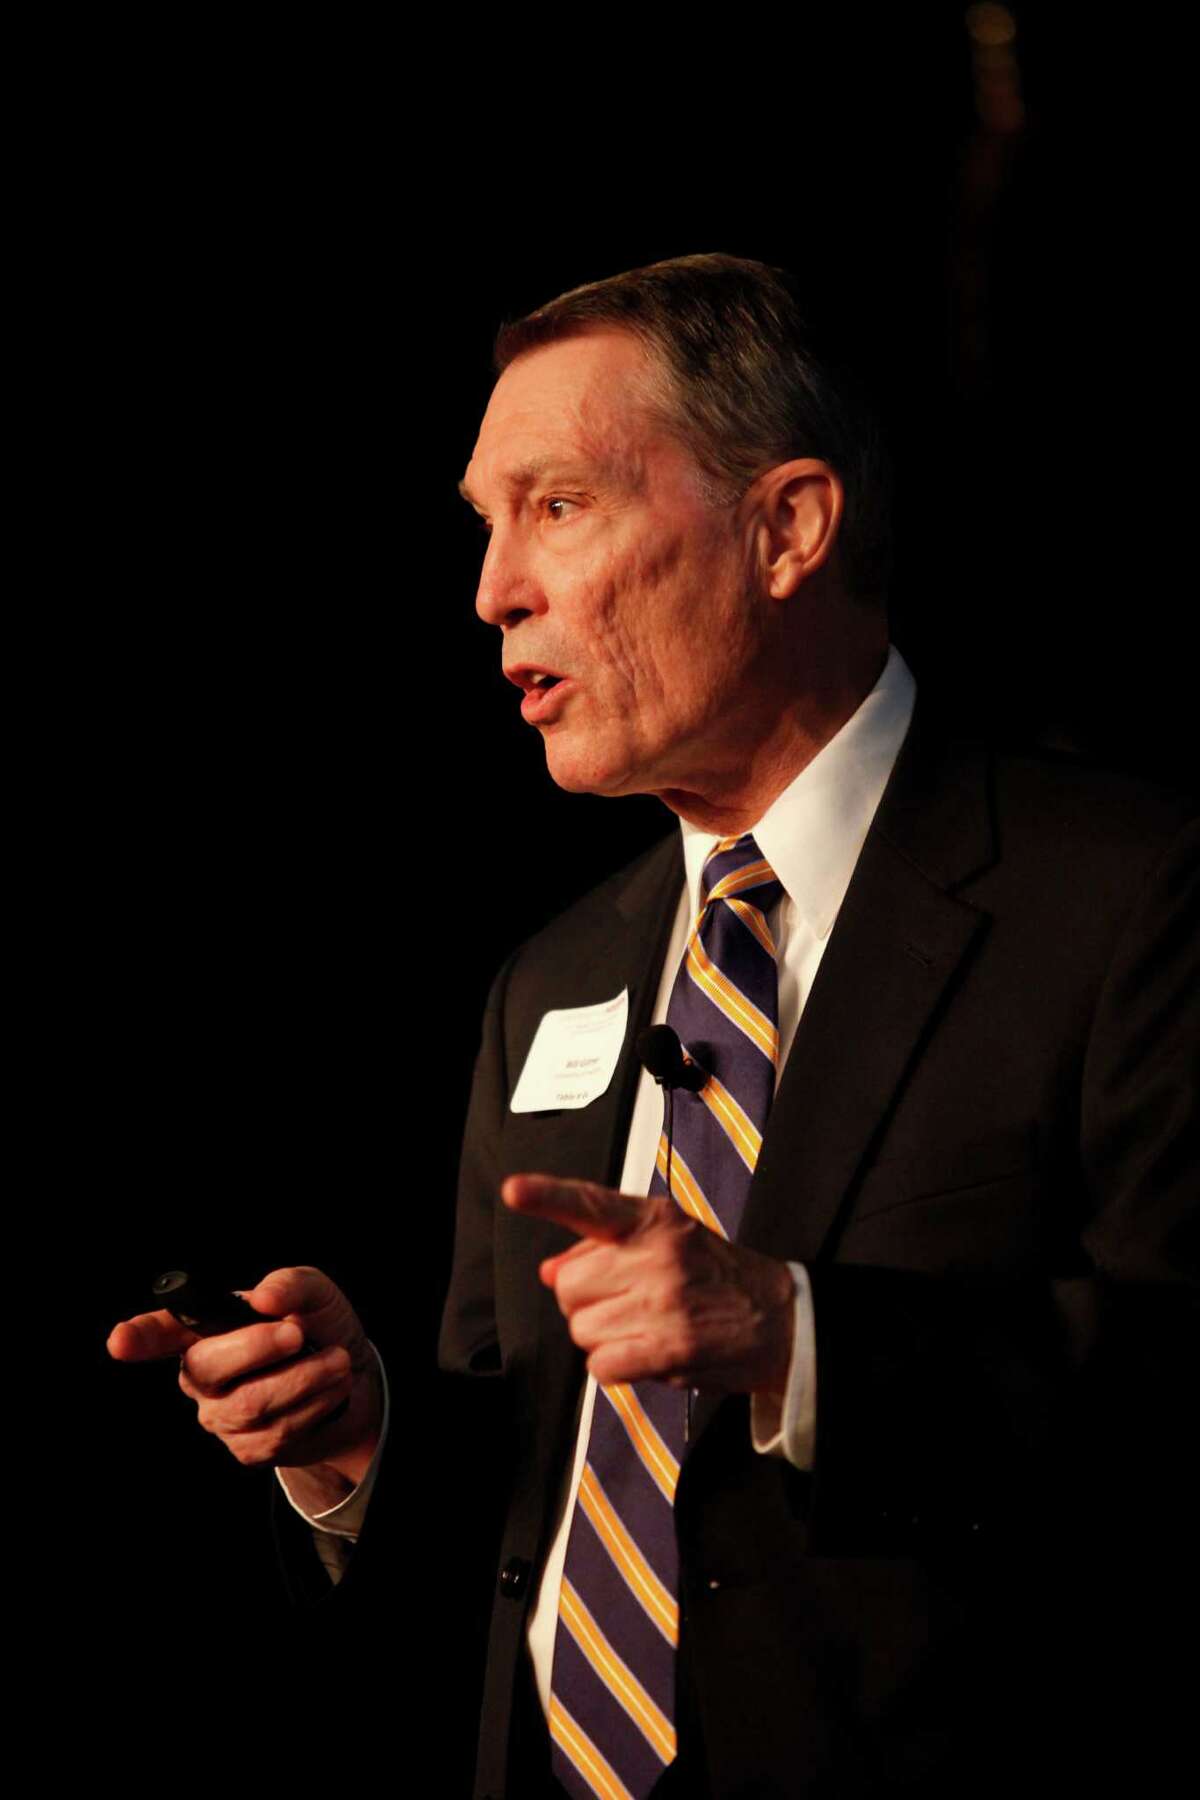 Bill Gilmer, the director of the University of Houston's Institute for Regional Forecasting, gives his annual economic talk at the Hyatt Regency Hotel, Nov. 14, 2013 in Houston. (Eric Kayne/For the Chronicle)